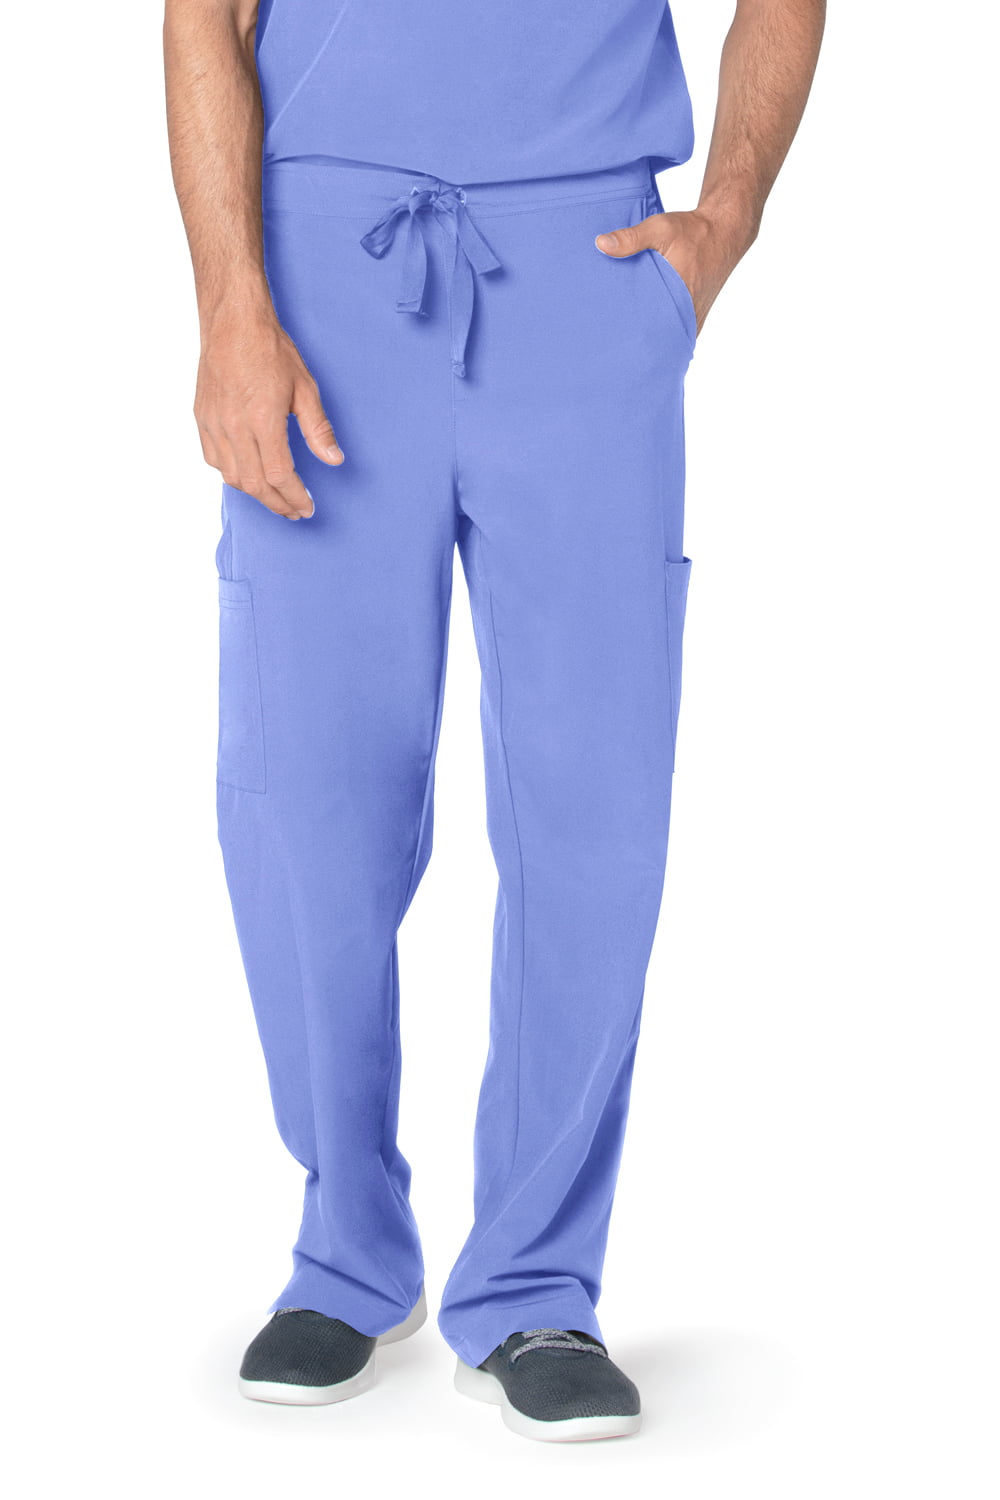 Adar Addition Scrubs For Men - Classic Cargo Scrub Pants - Walmart.com